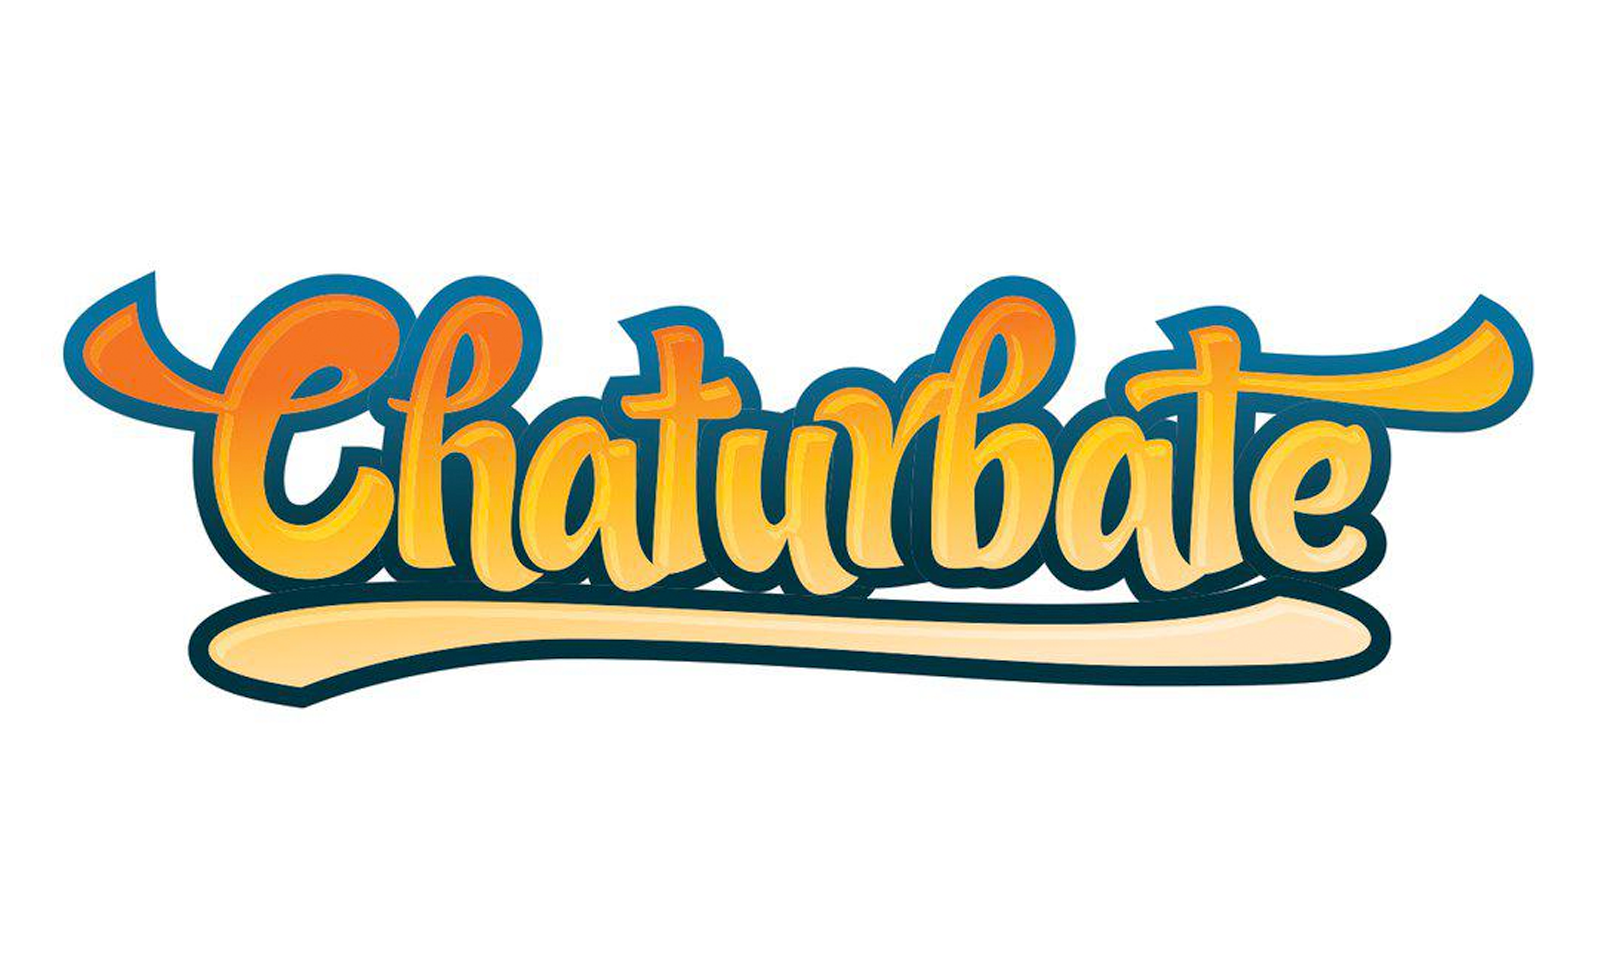 Chaturbate Wins 3 YNOT Awards